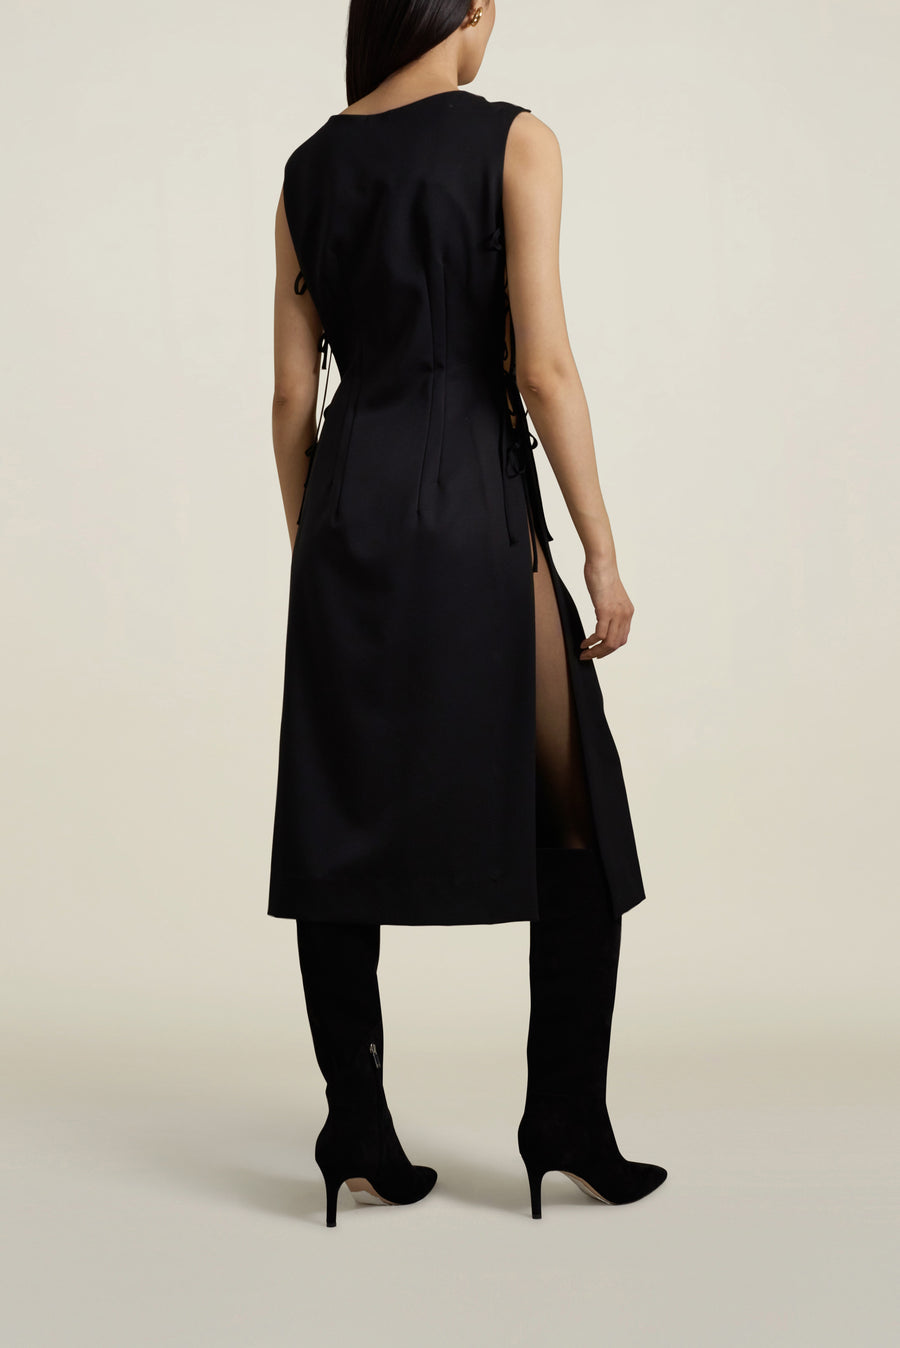 Elizabeth Vest Dress in Black